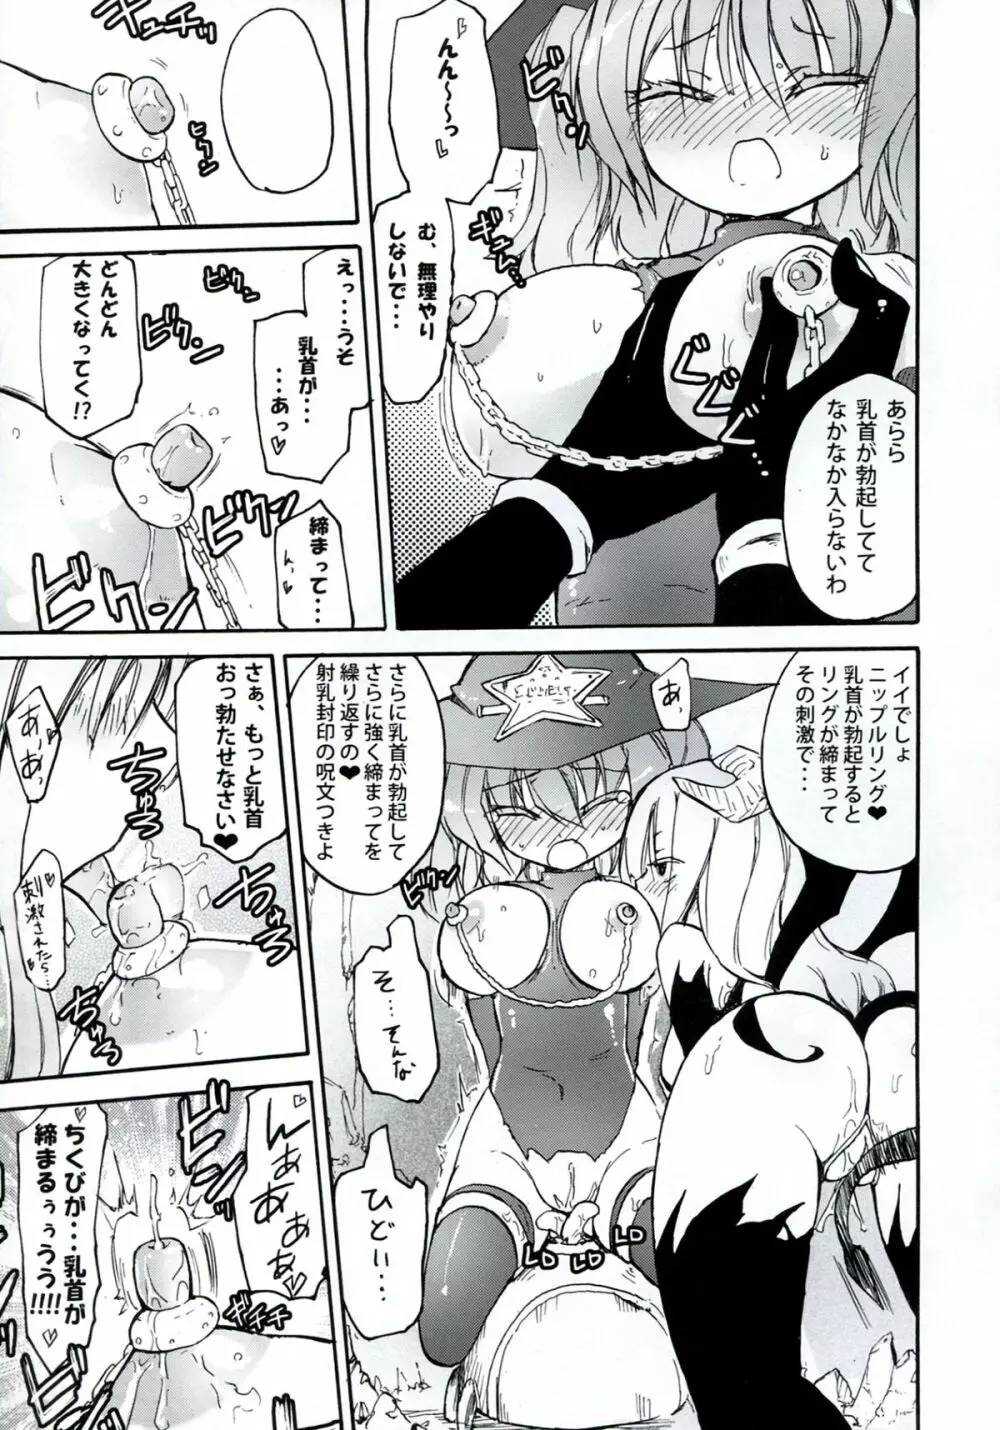 Homuraya Milk ★ Collection 2 - page49